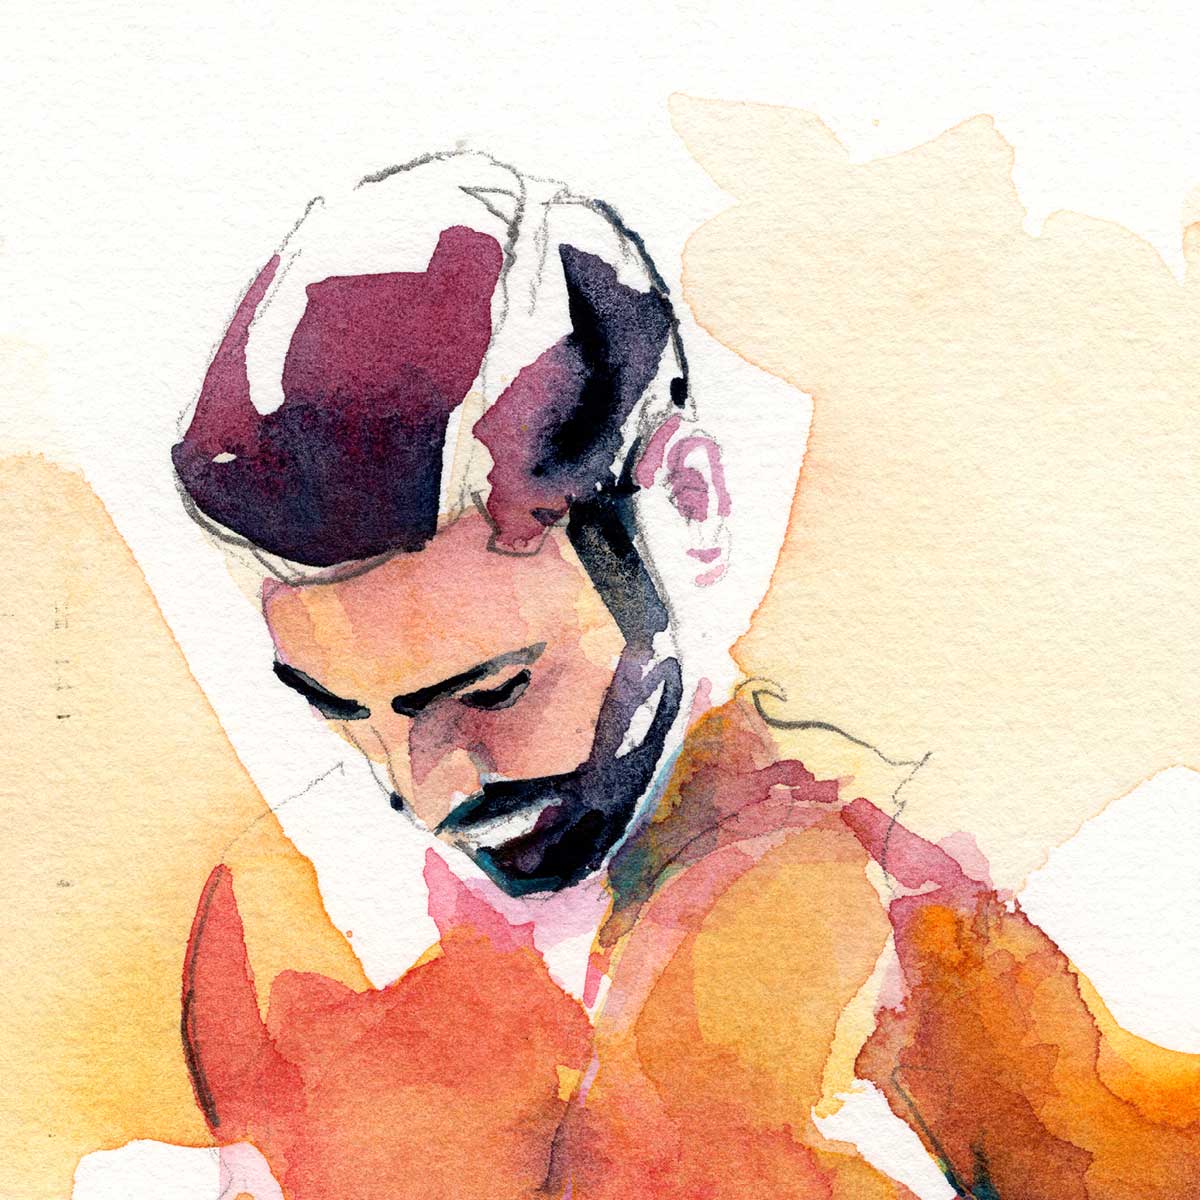 Pensive Shirtless Man with Full Beard - Original Watercolor Painting